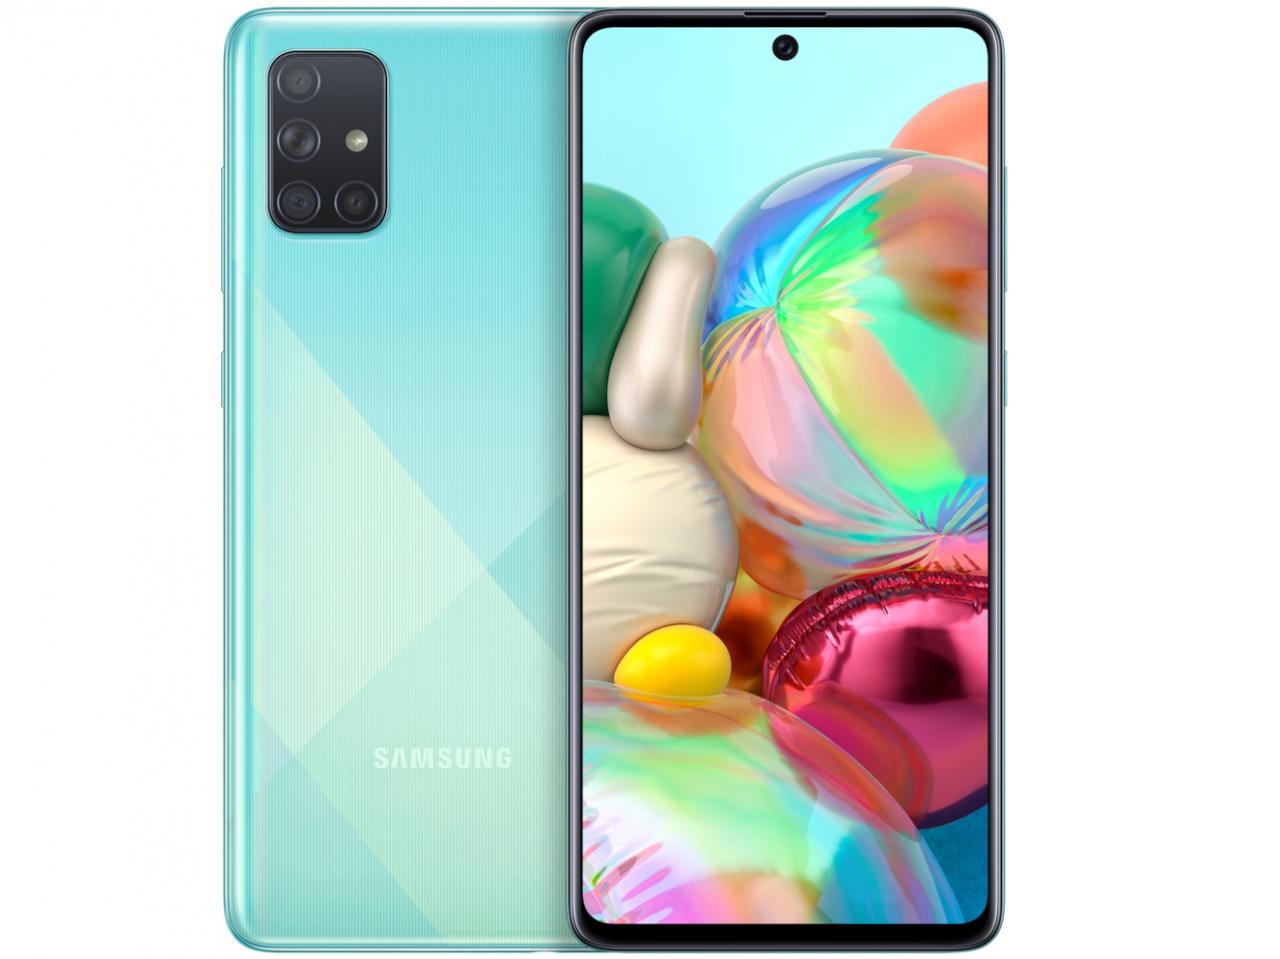 Samsung Galaxy a71 Specification & Price In Nigeria